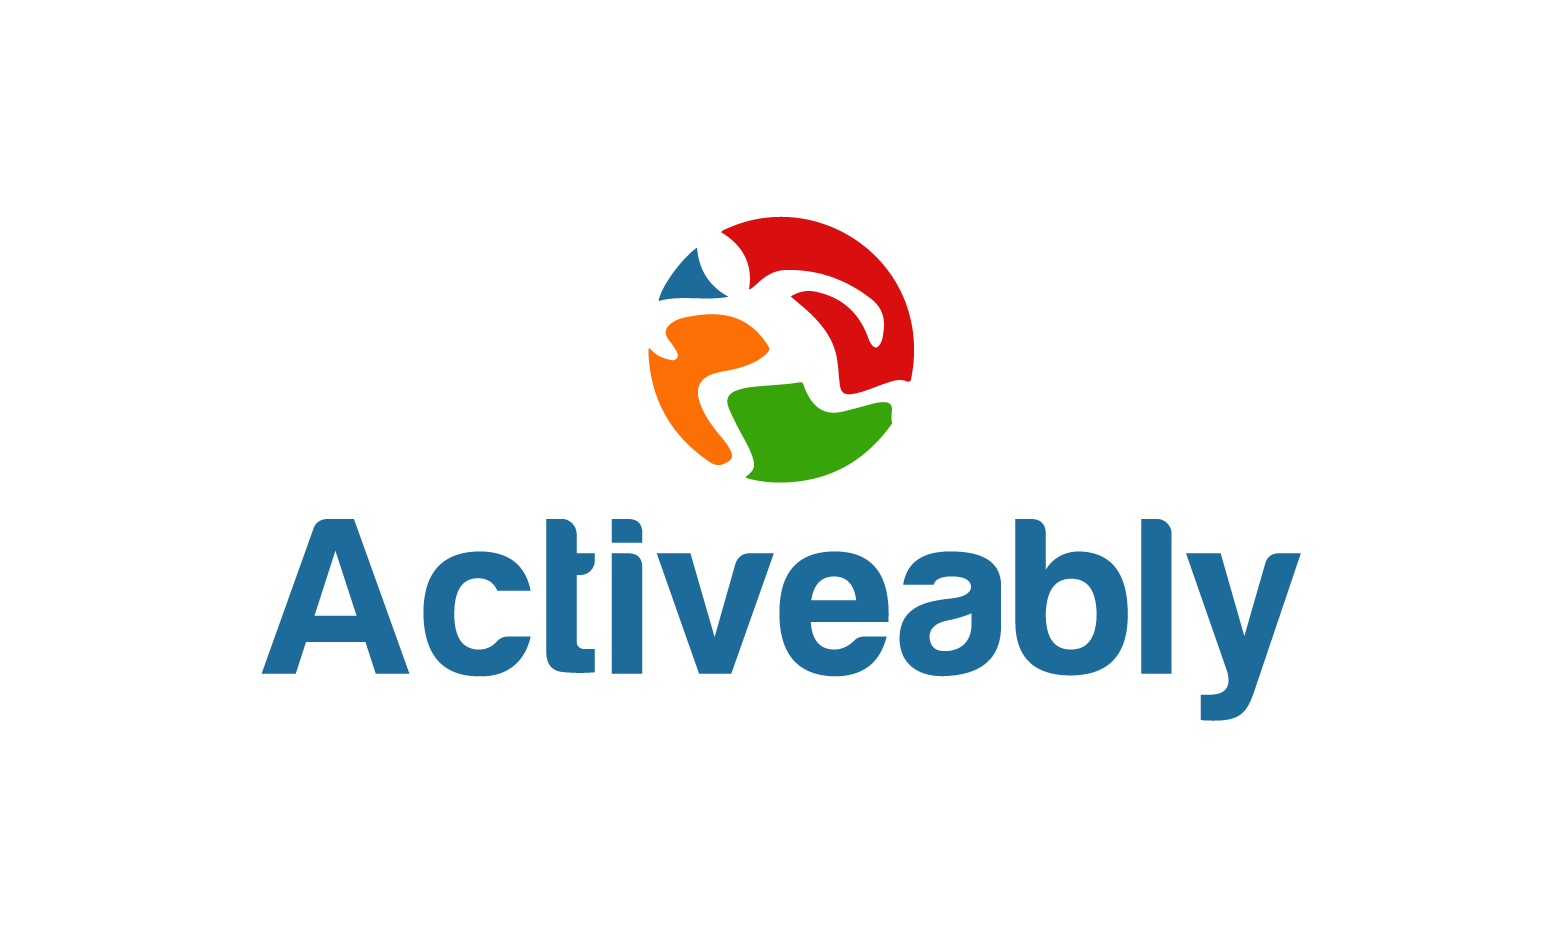 Activeably.com - Creative brandable domain for sale